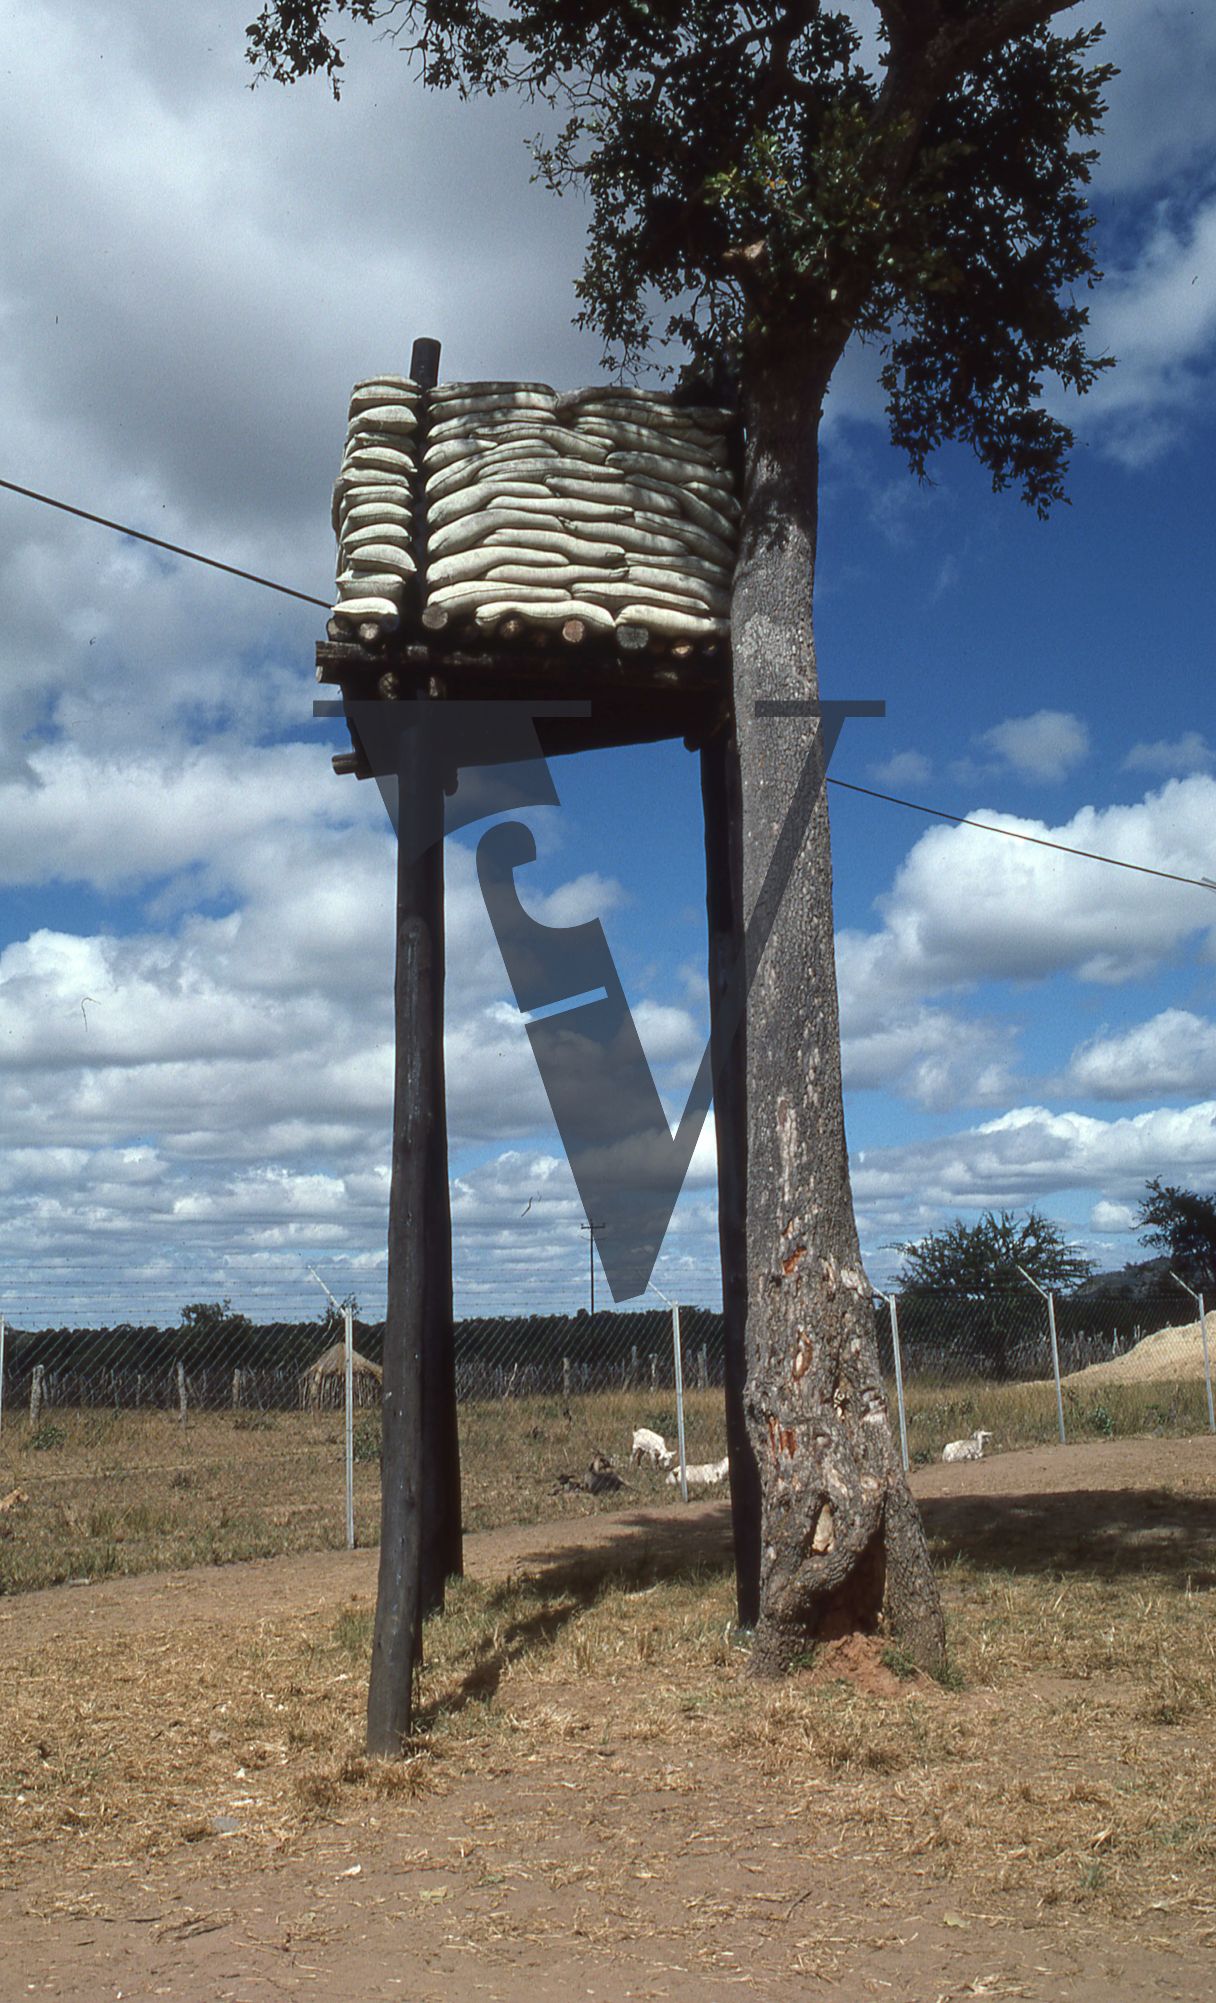 Rhodesia, “protected village”, gun tower, full shot.